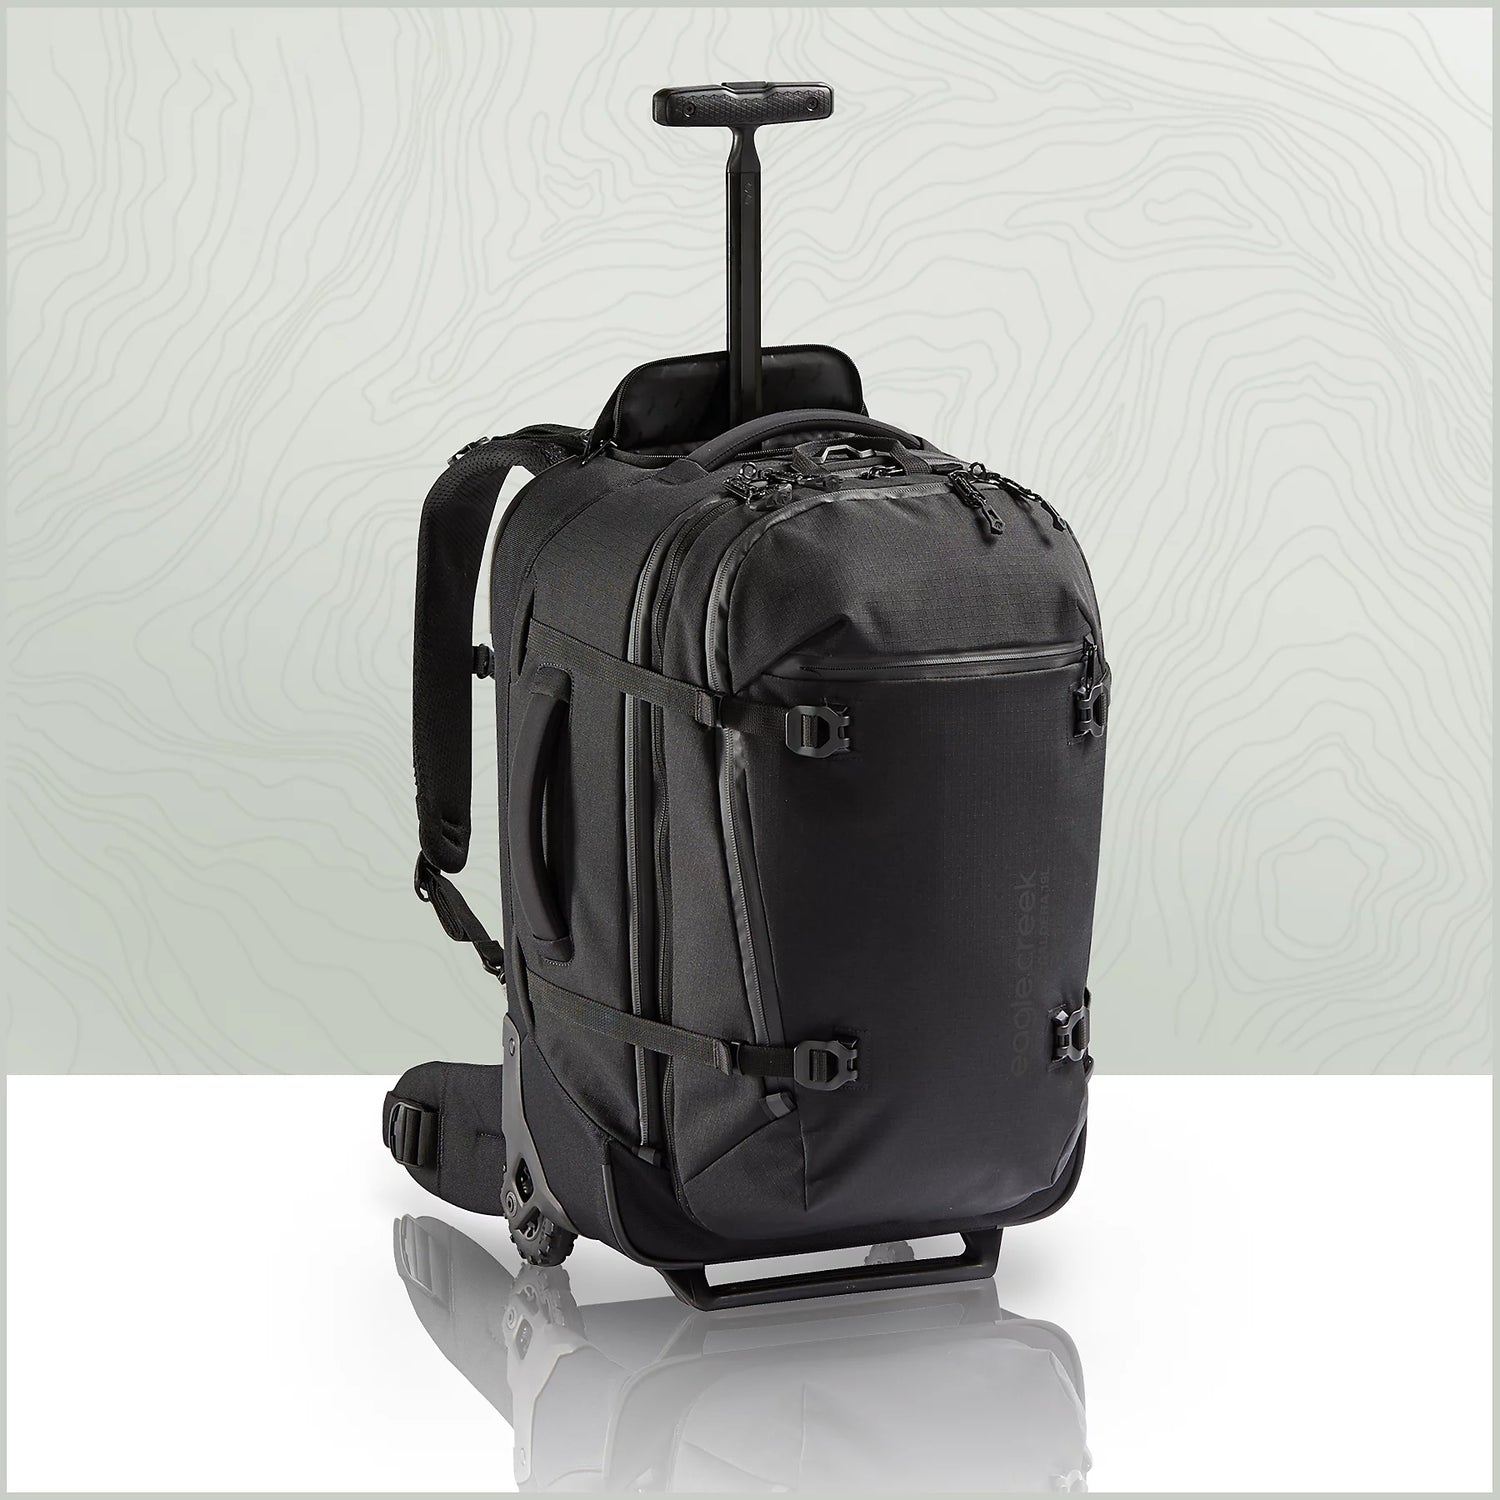 Caldera™ Convertible International Carry-On Luggage